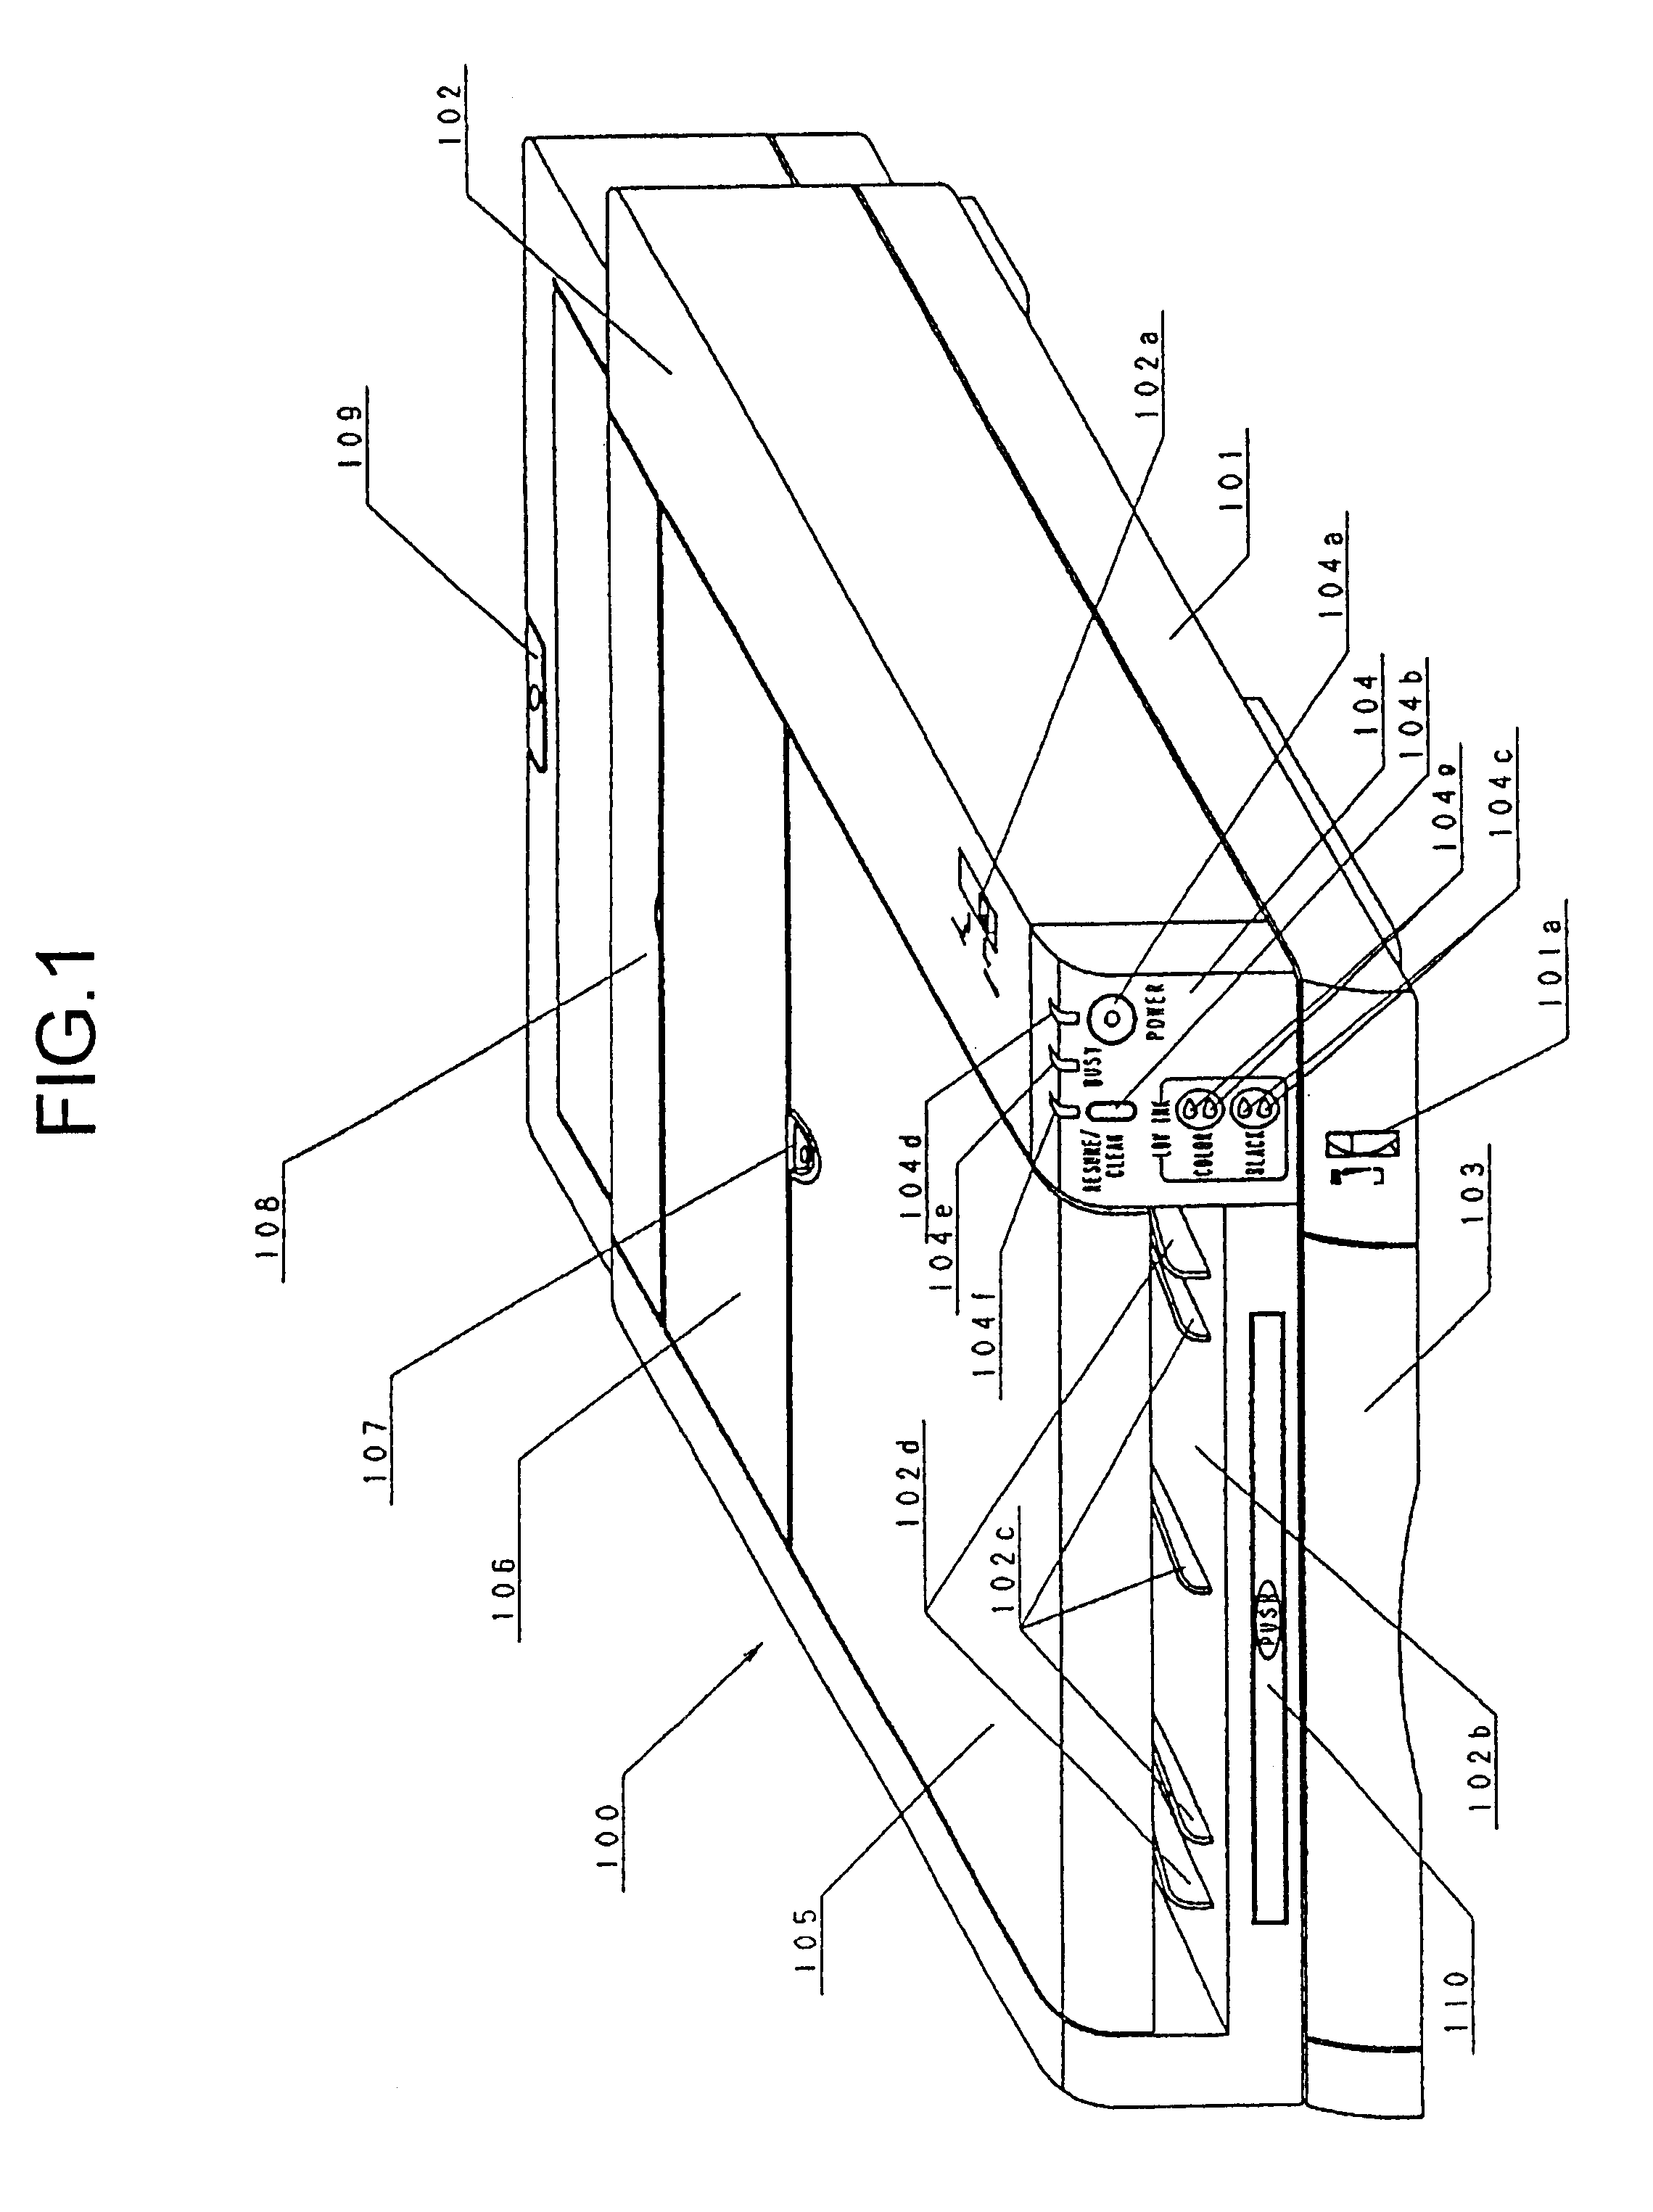 Sheet feeding apparatus and image processing apparatus